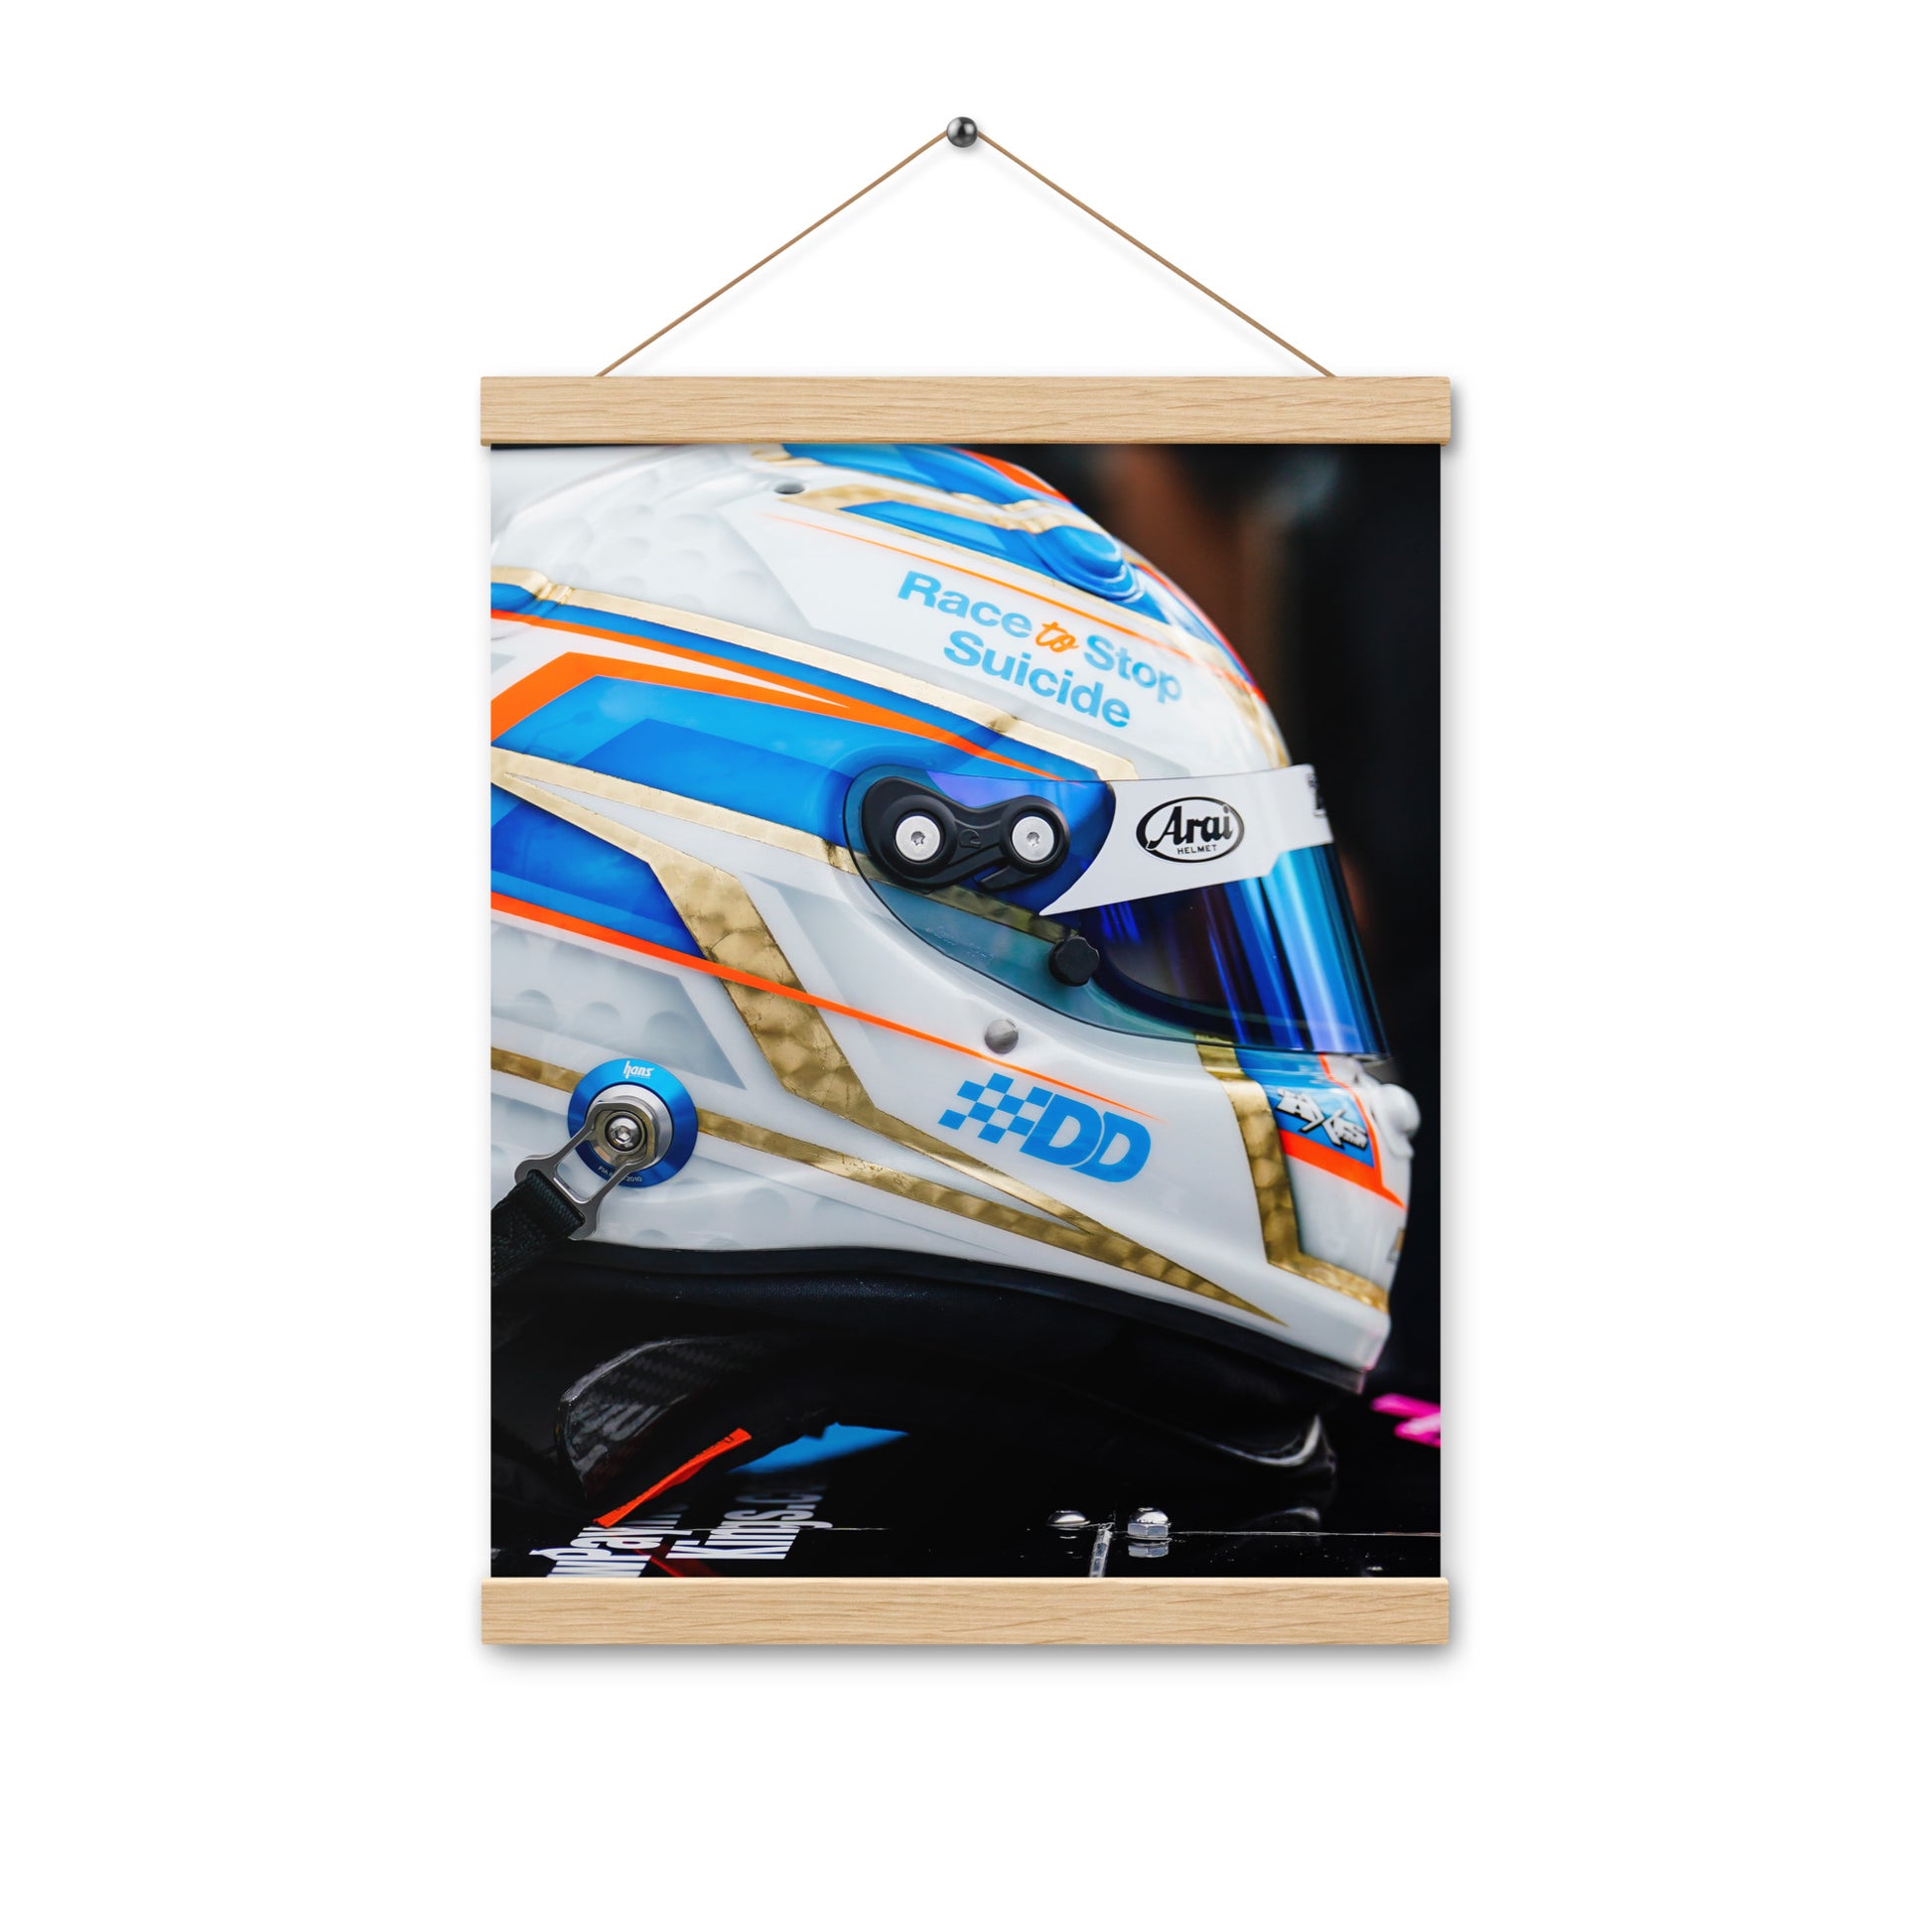 Poster with hangers - [Daniel Dye Racing Shop]